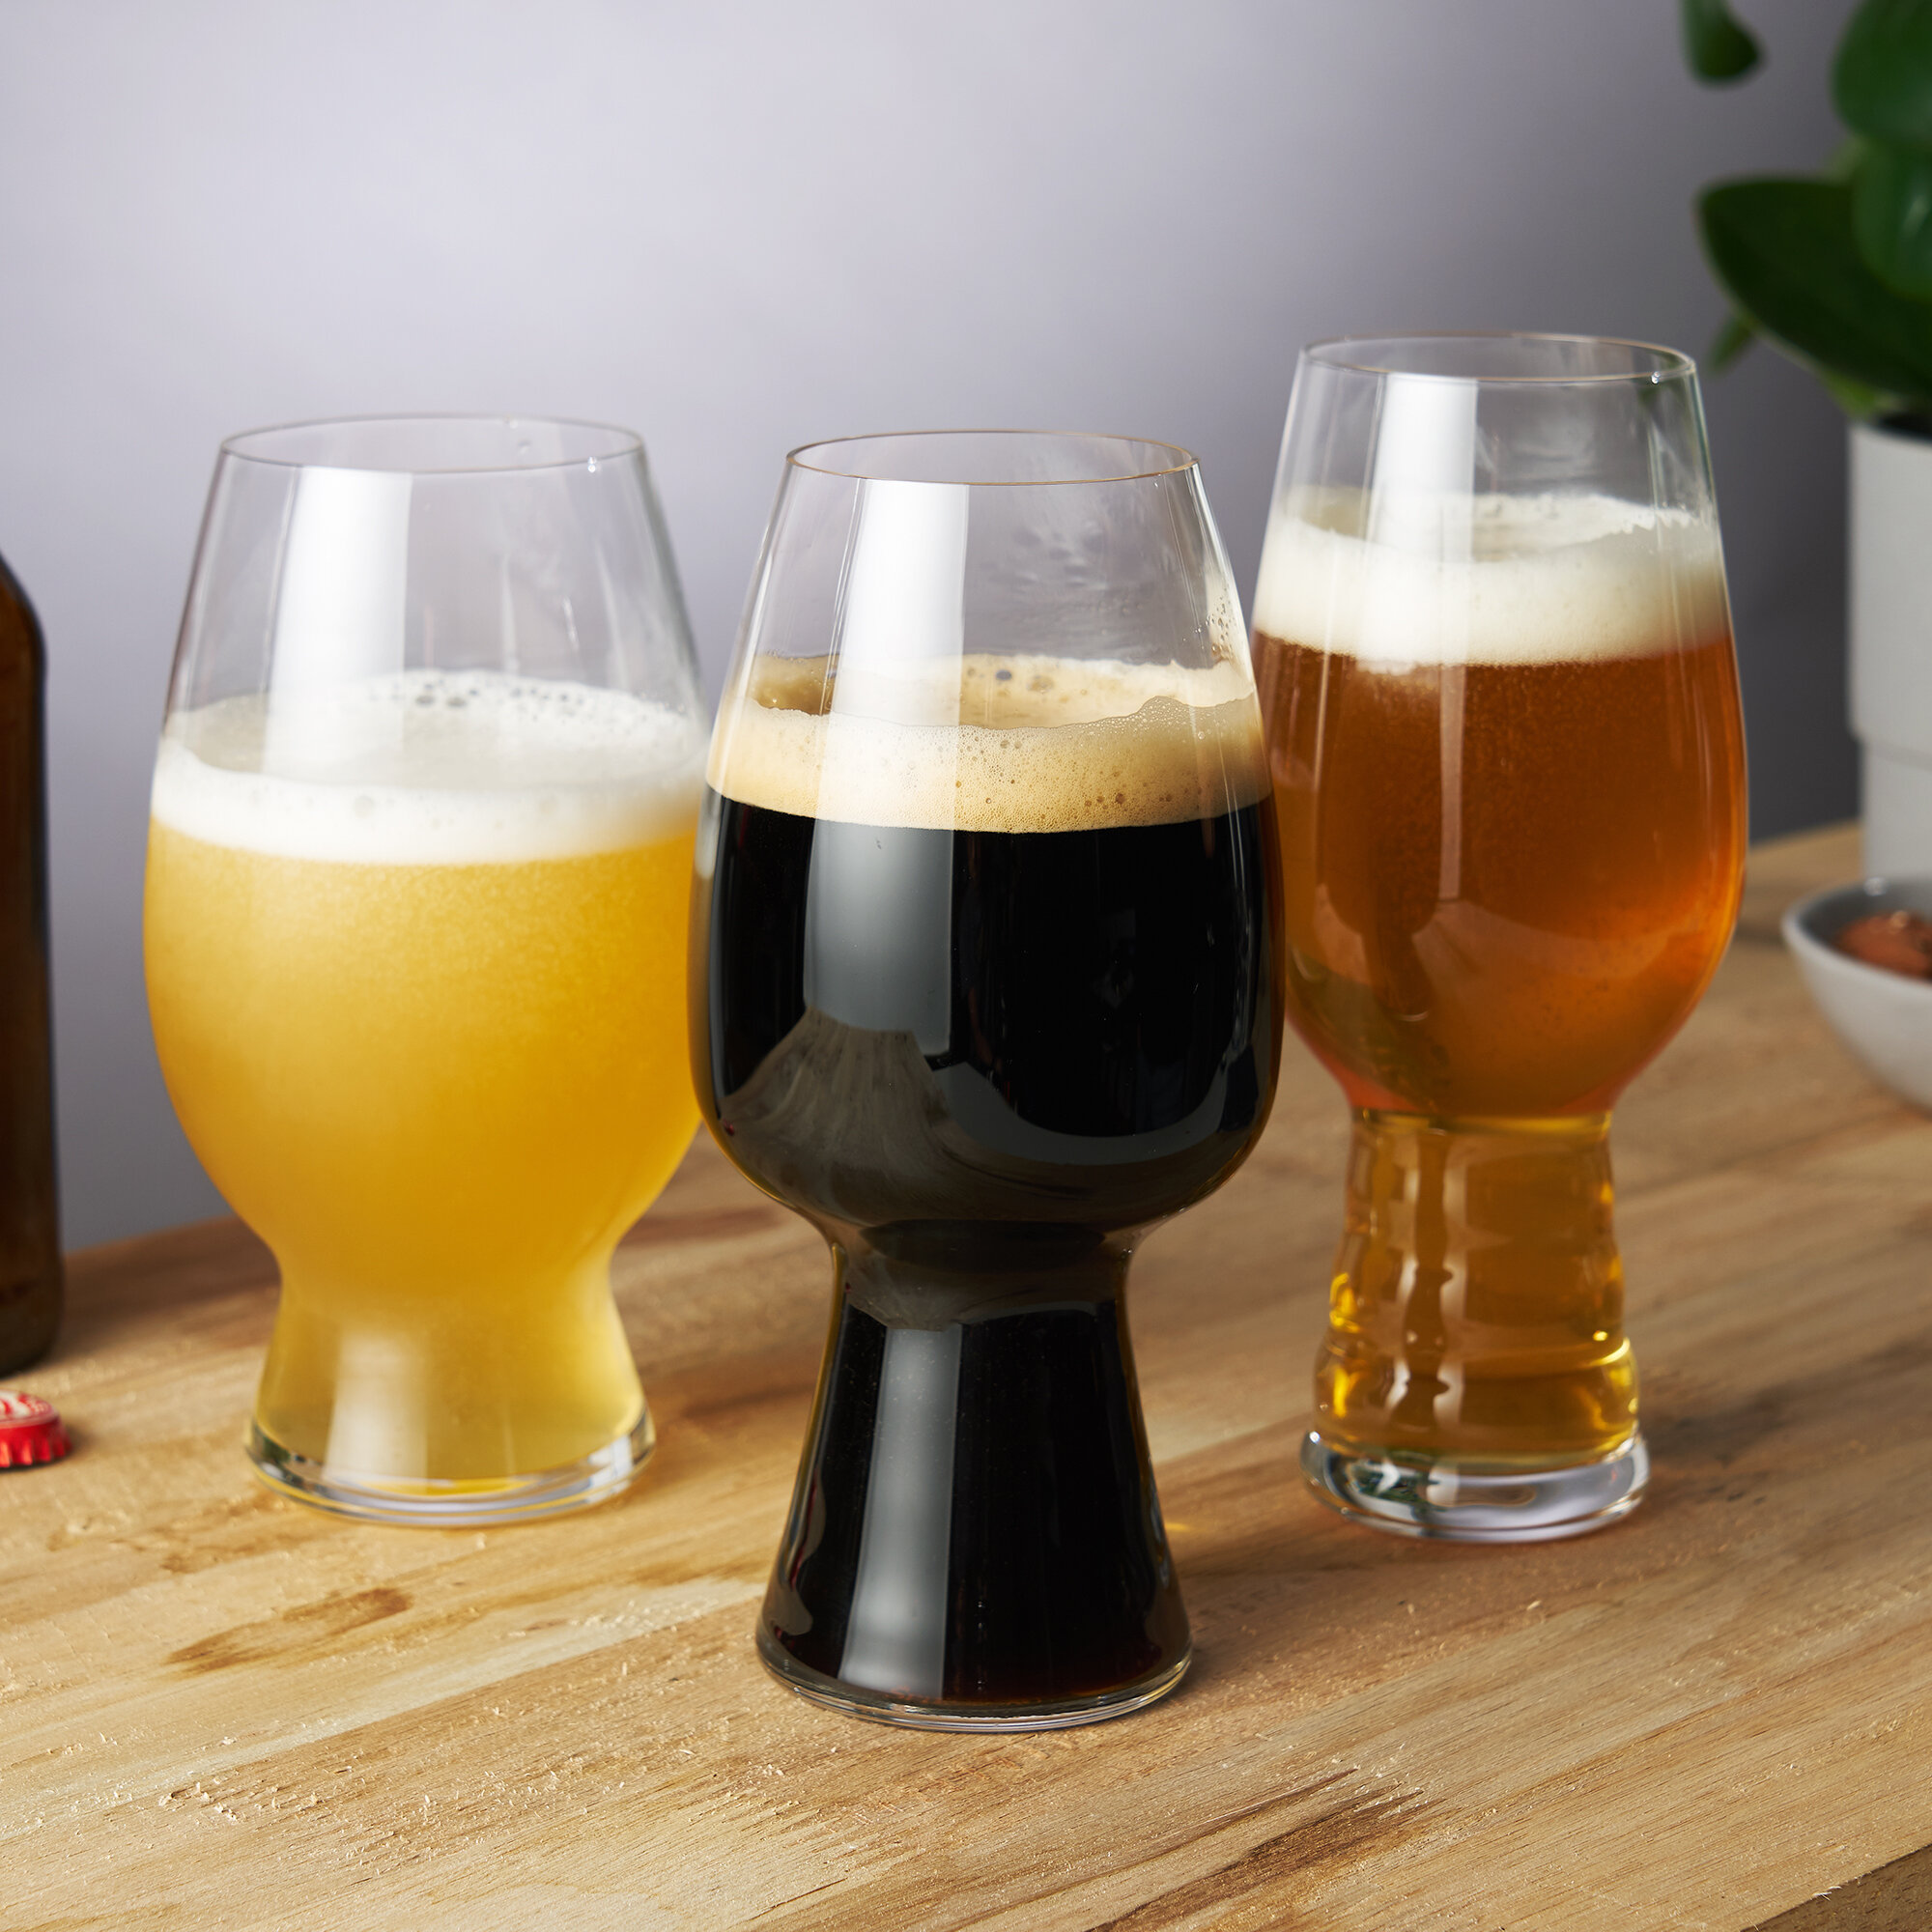 Spiegelau 4 - Piece Lead Free Crystal Beer Flight Set Assorted Glassware Set